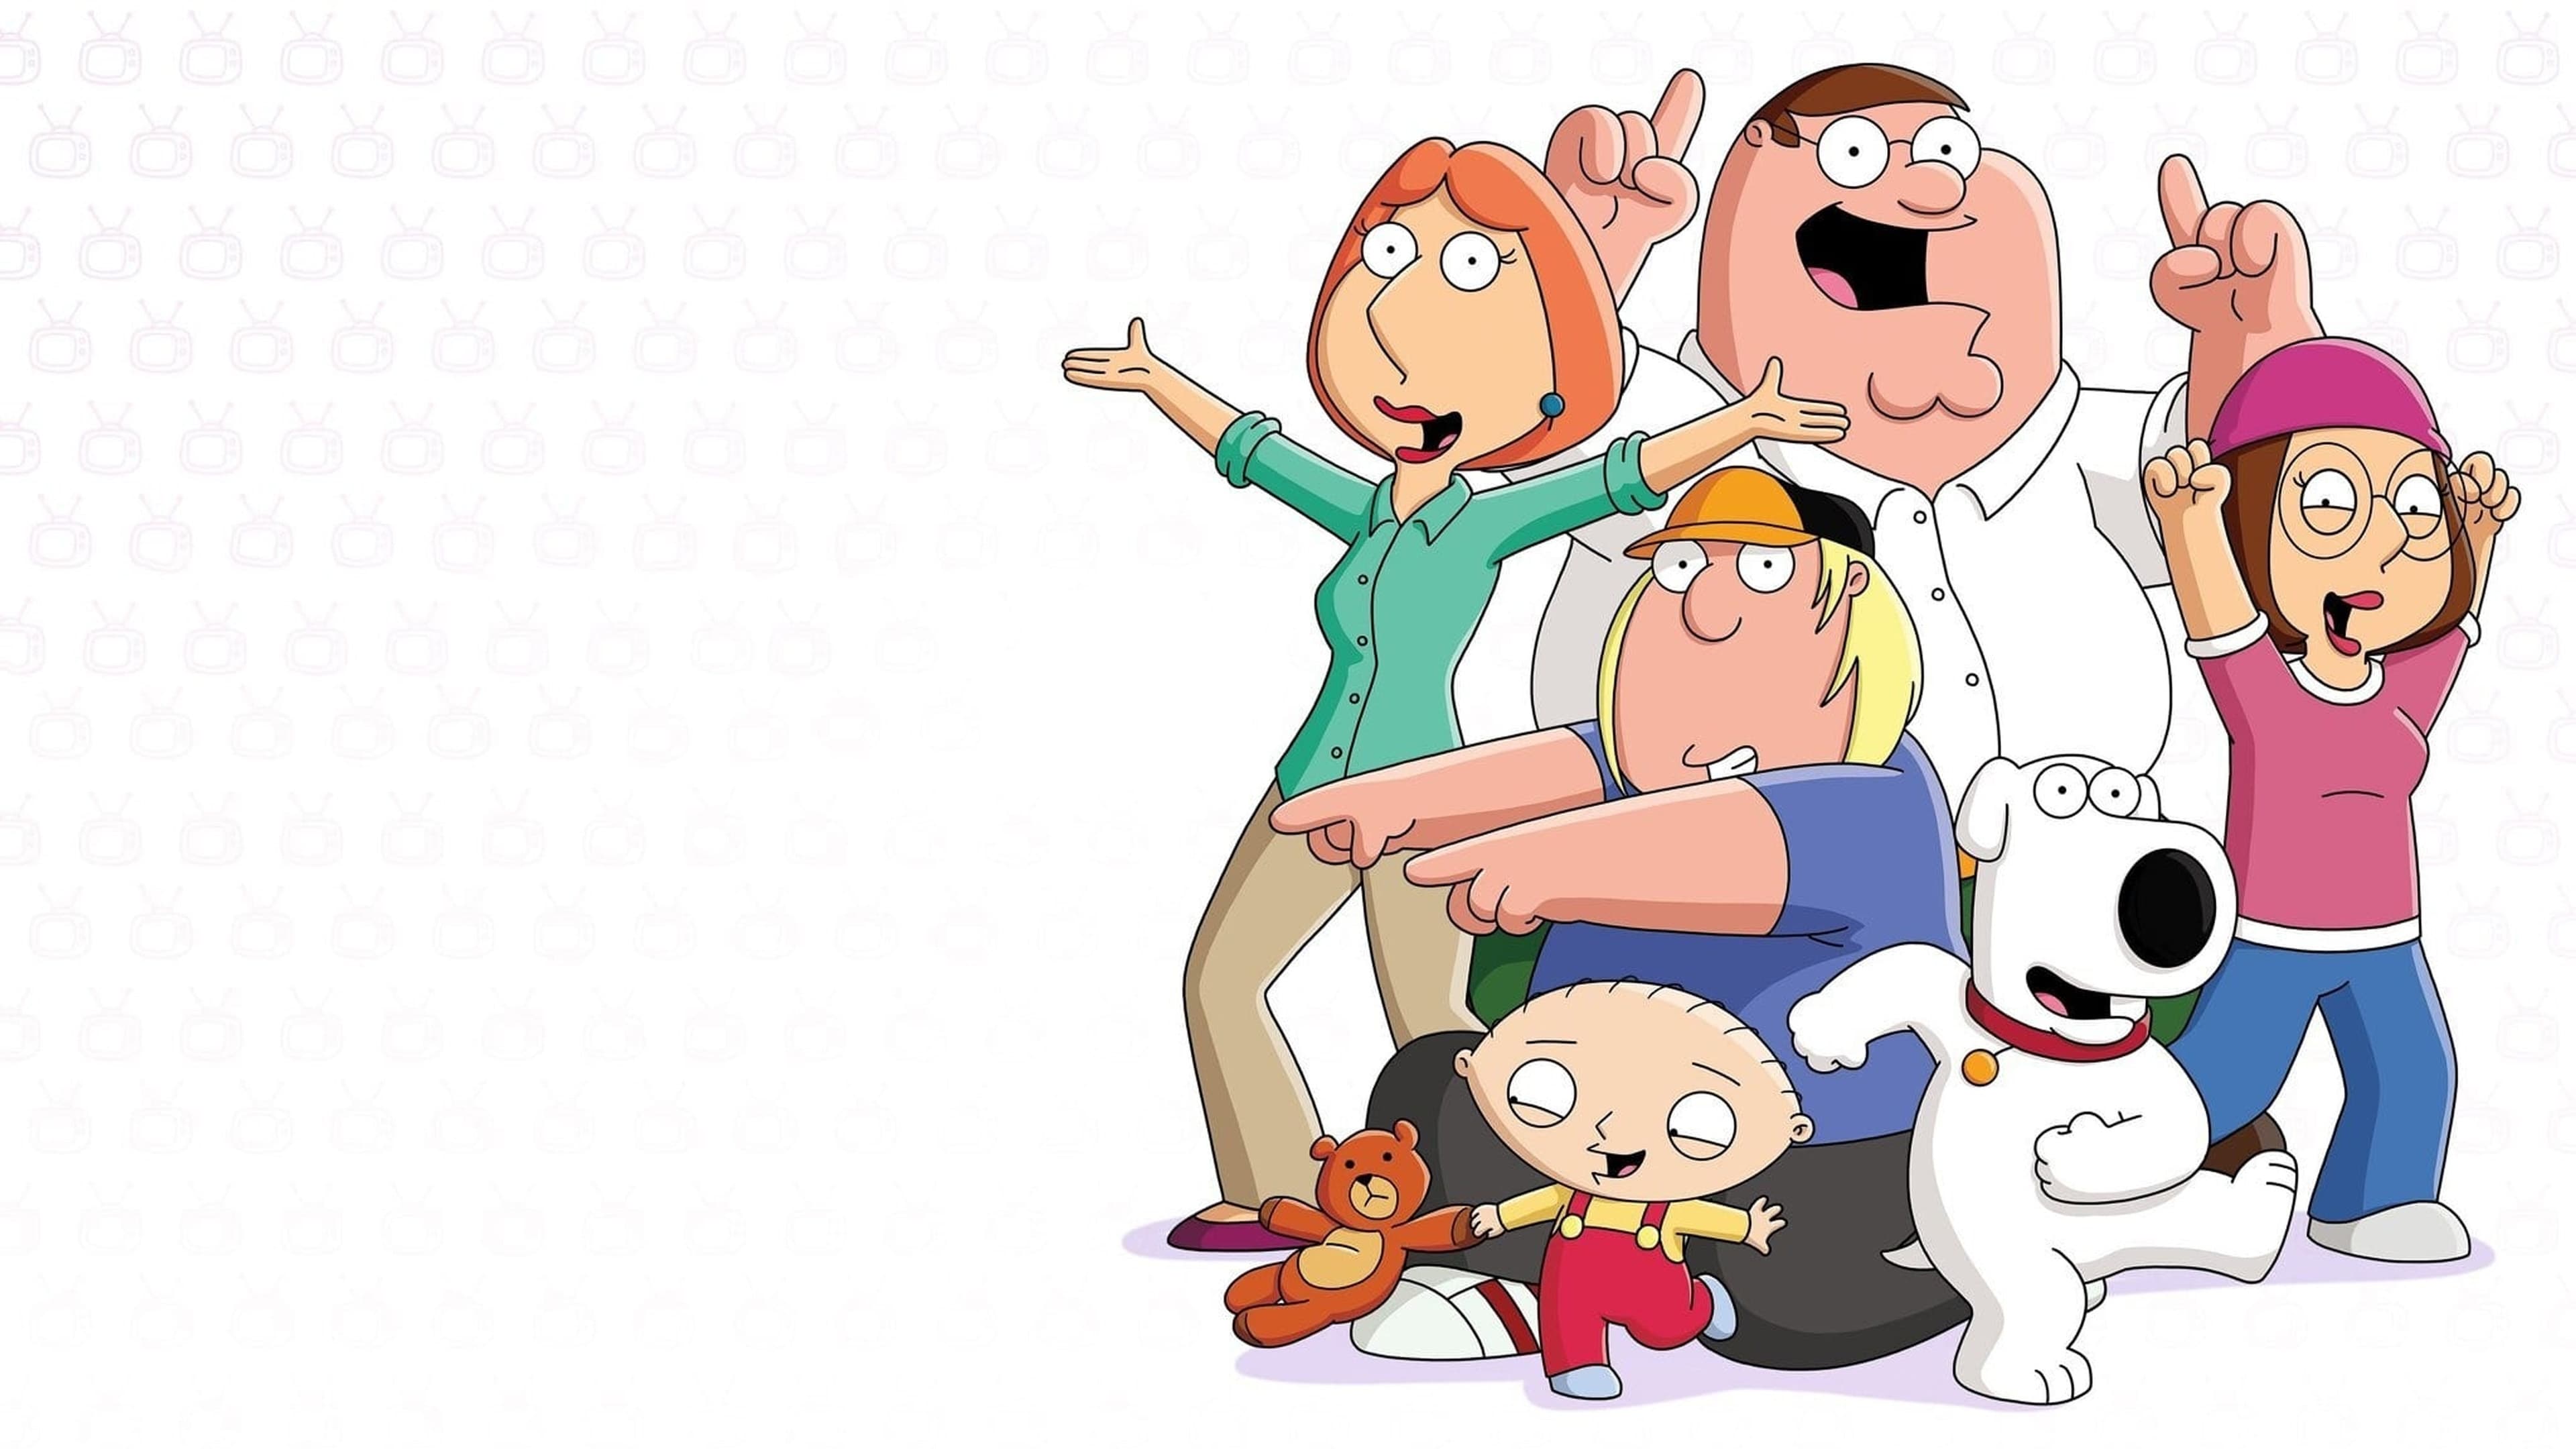 Family Guy - Season 1